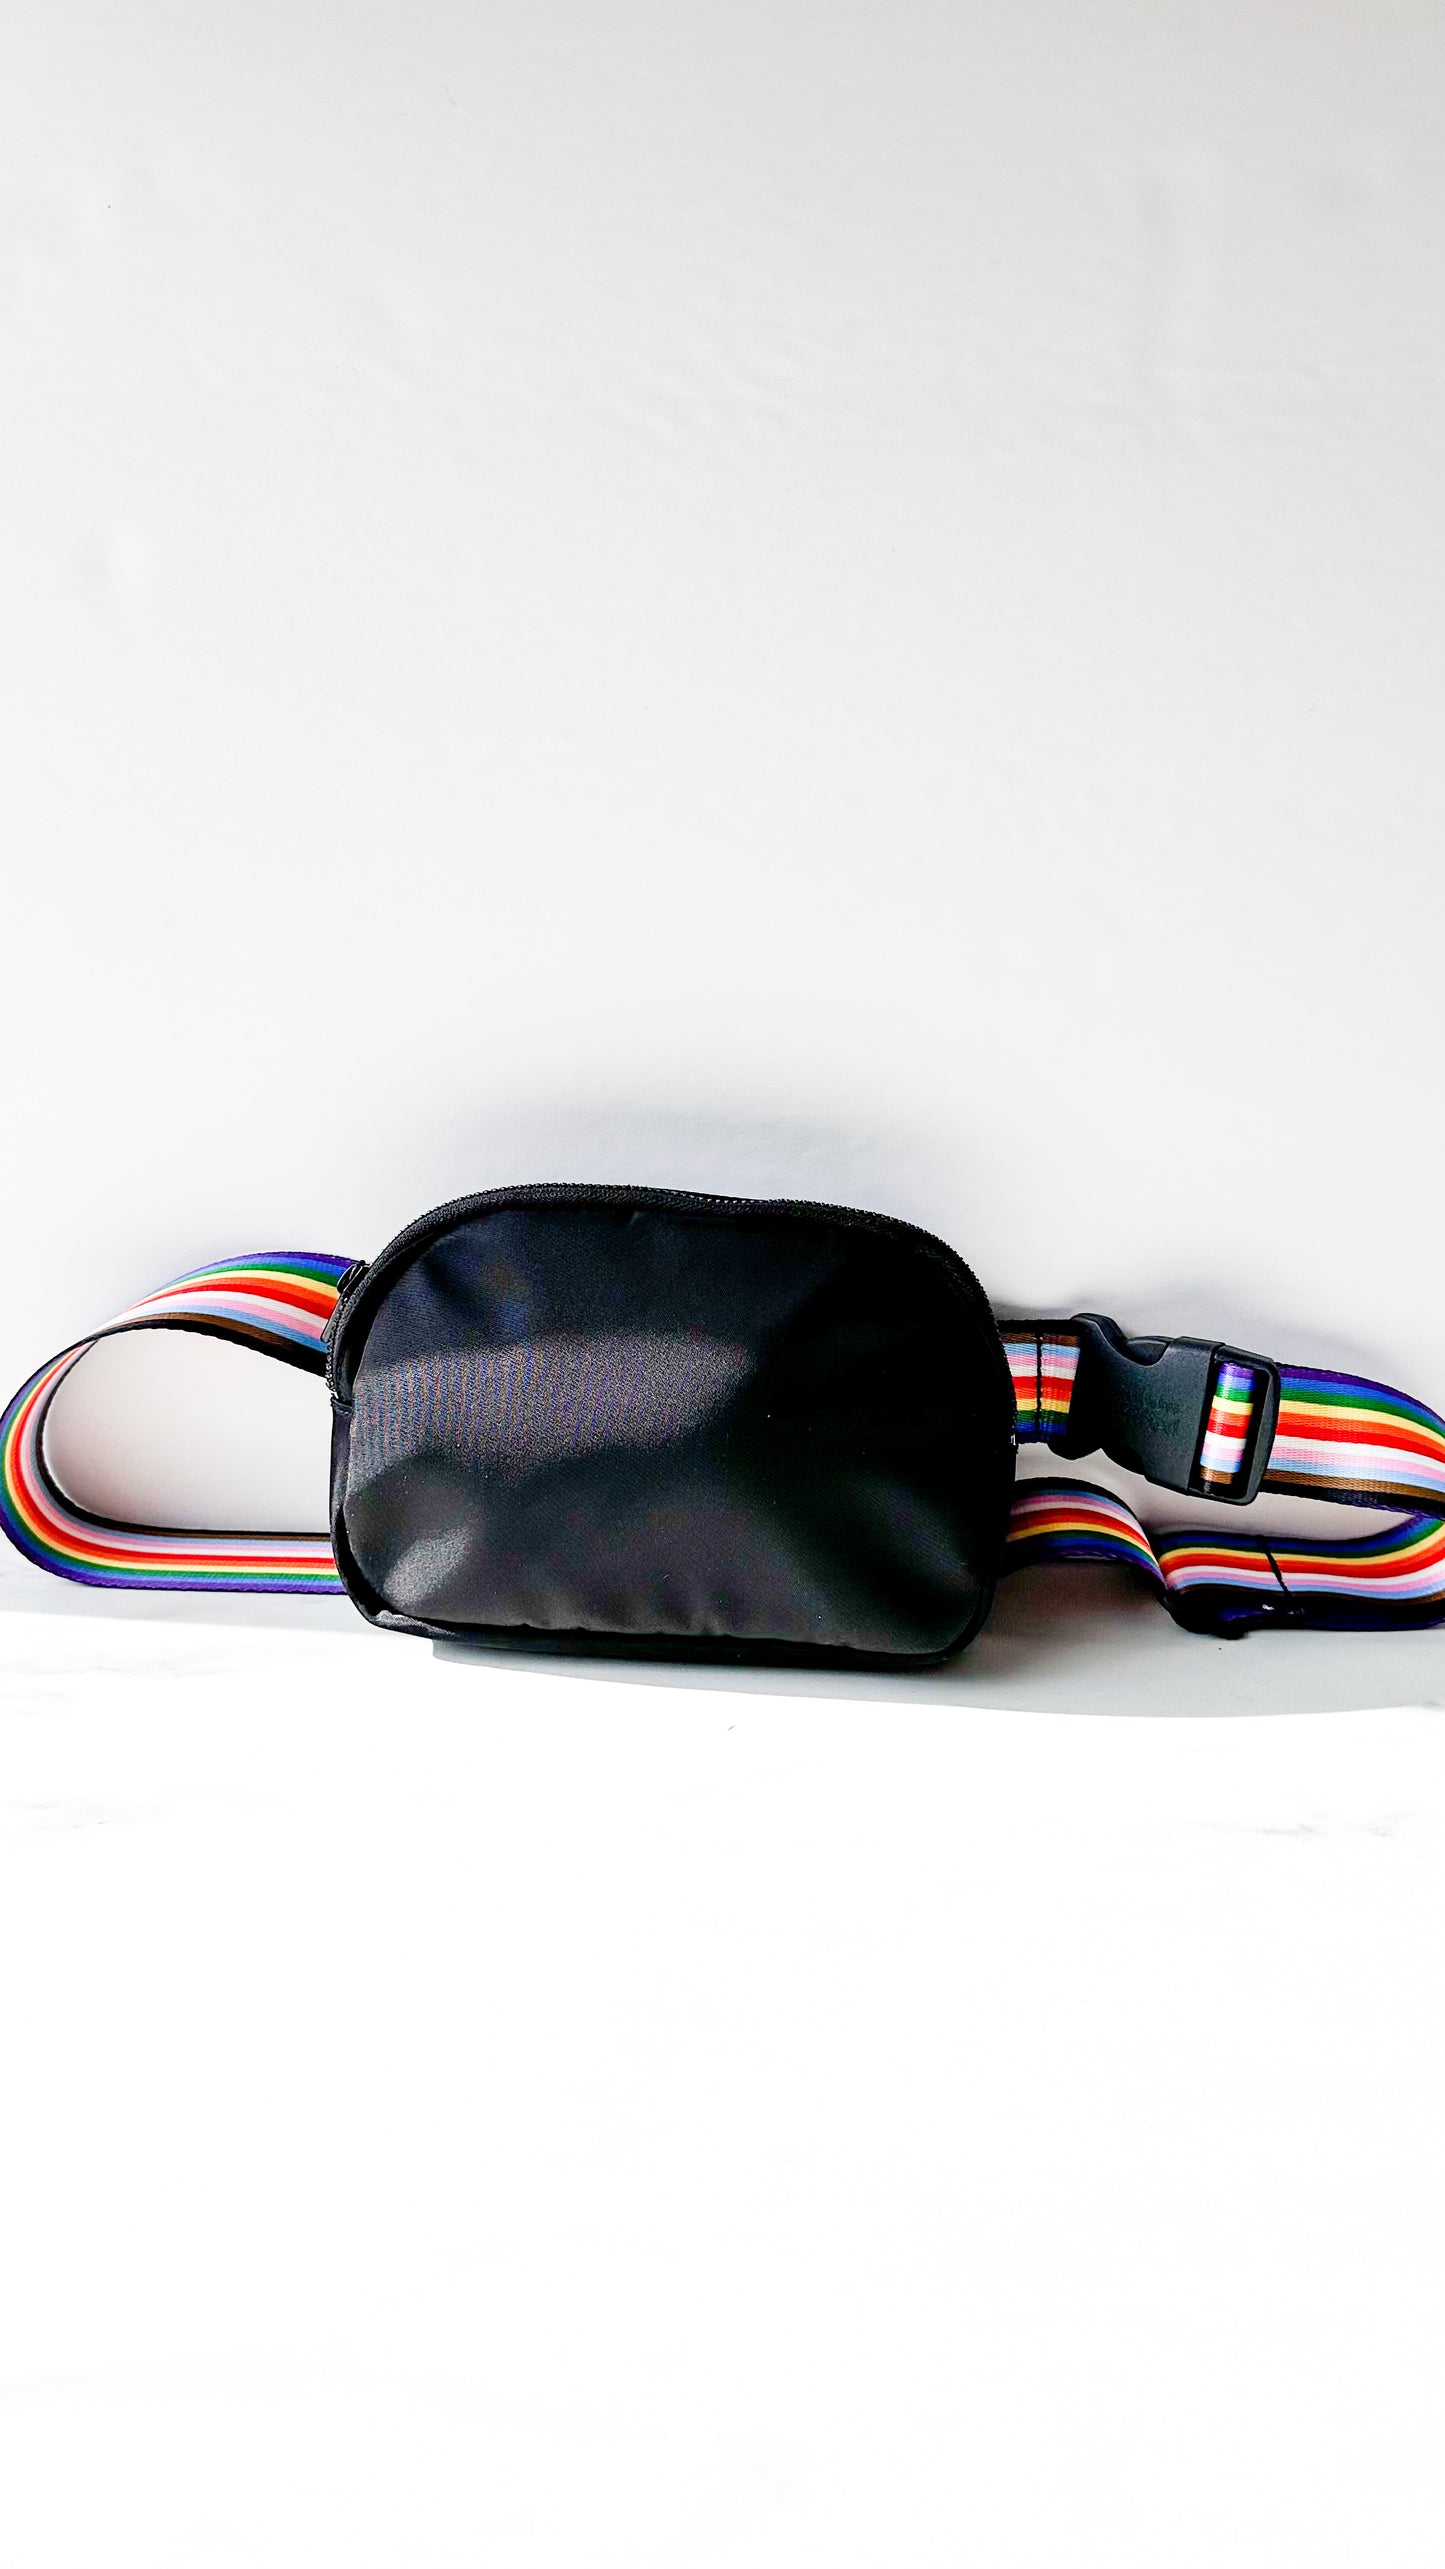 Rainbow Belt Bag - Black